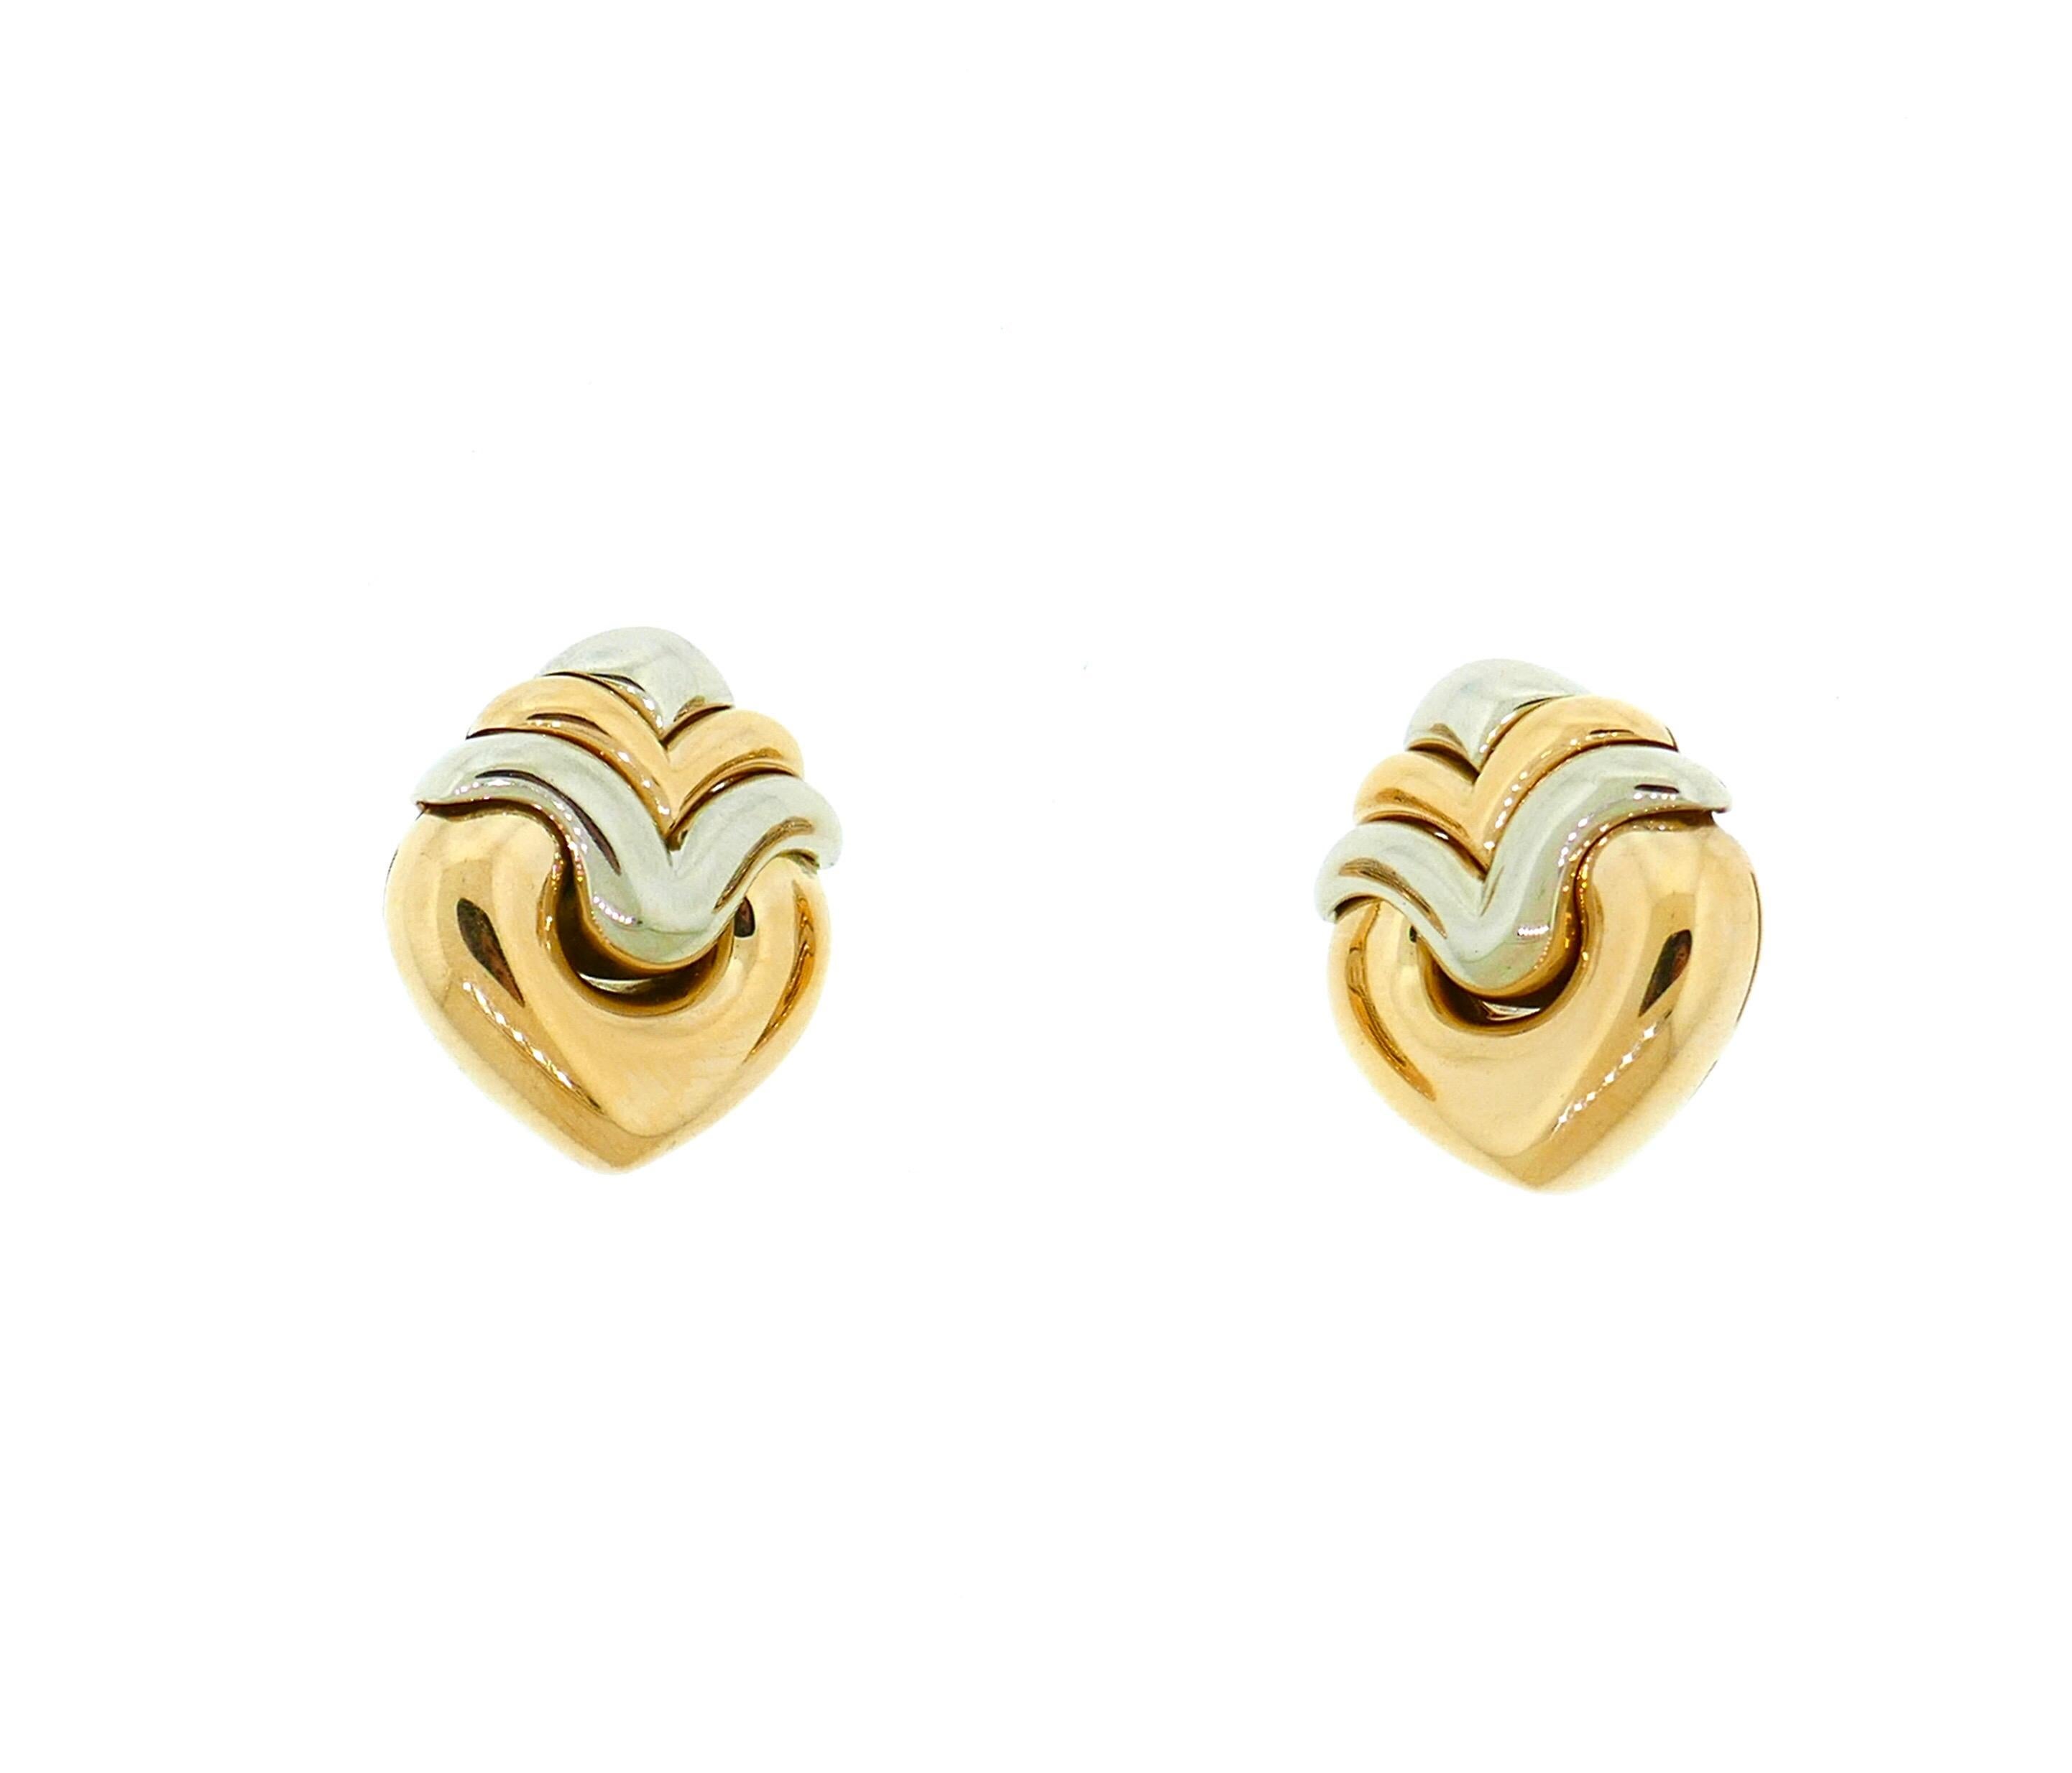 Bulgari Doppio Cuore 18 Karat Yellow White Gold Heart Shaped Earrings

These are beautiful and classic Bvlgari earrings. They feature a heart motif comprised of 18 karat yellow and white gold. 

Dimensions: 1.13